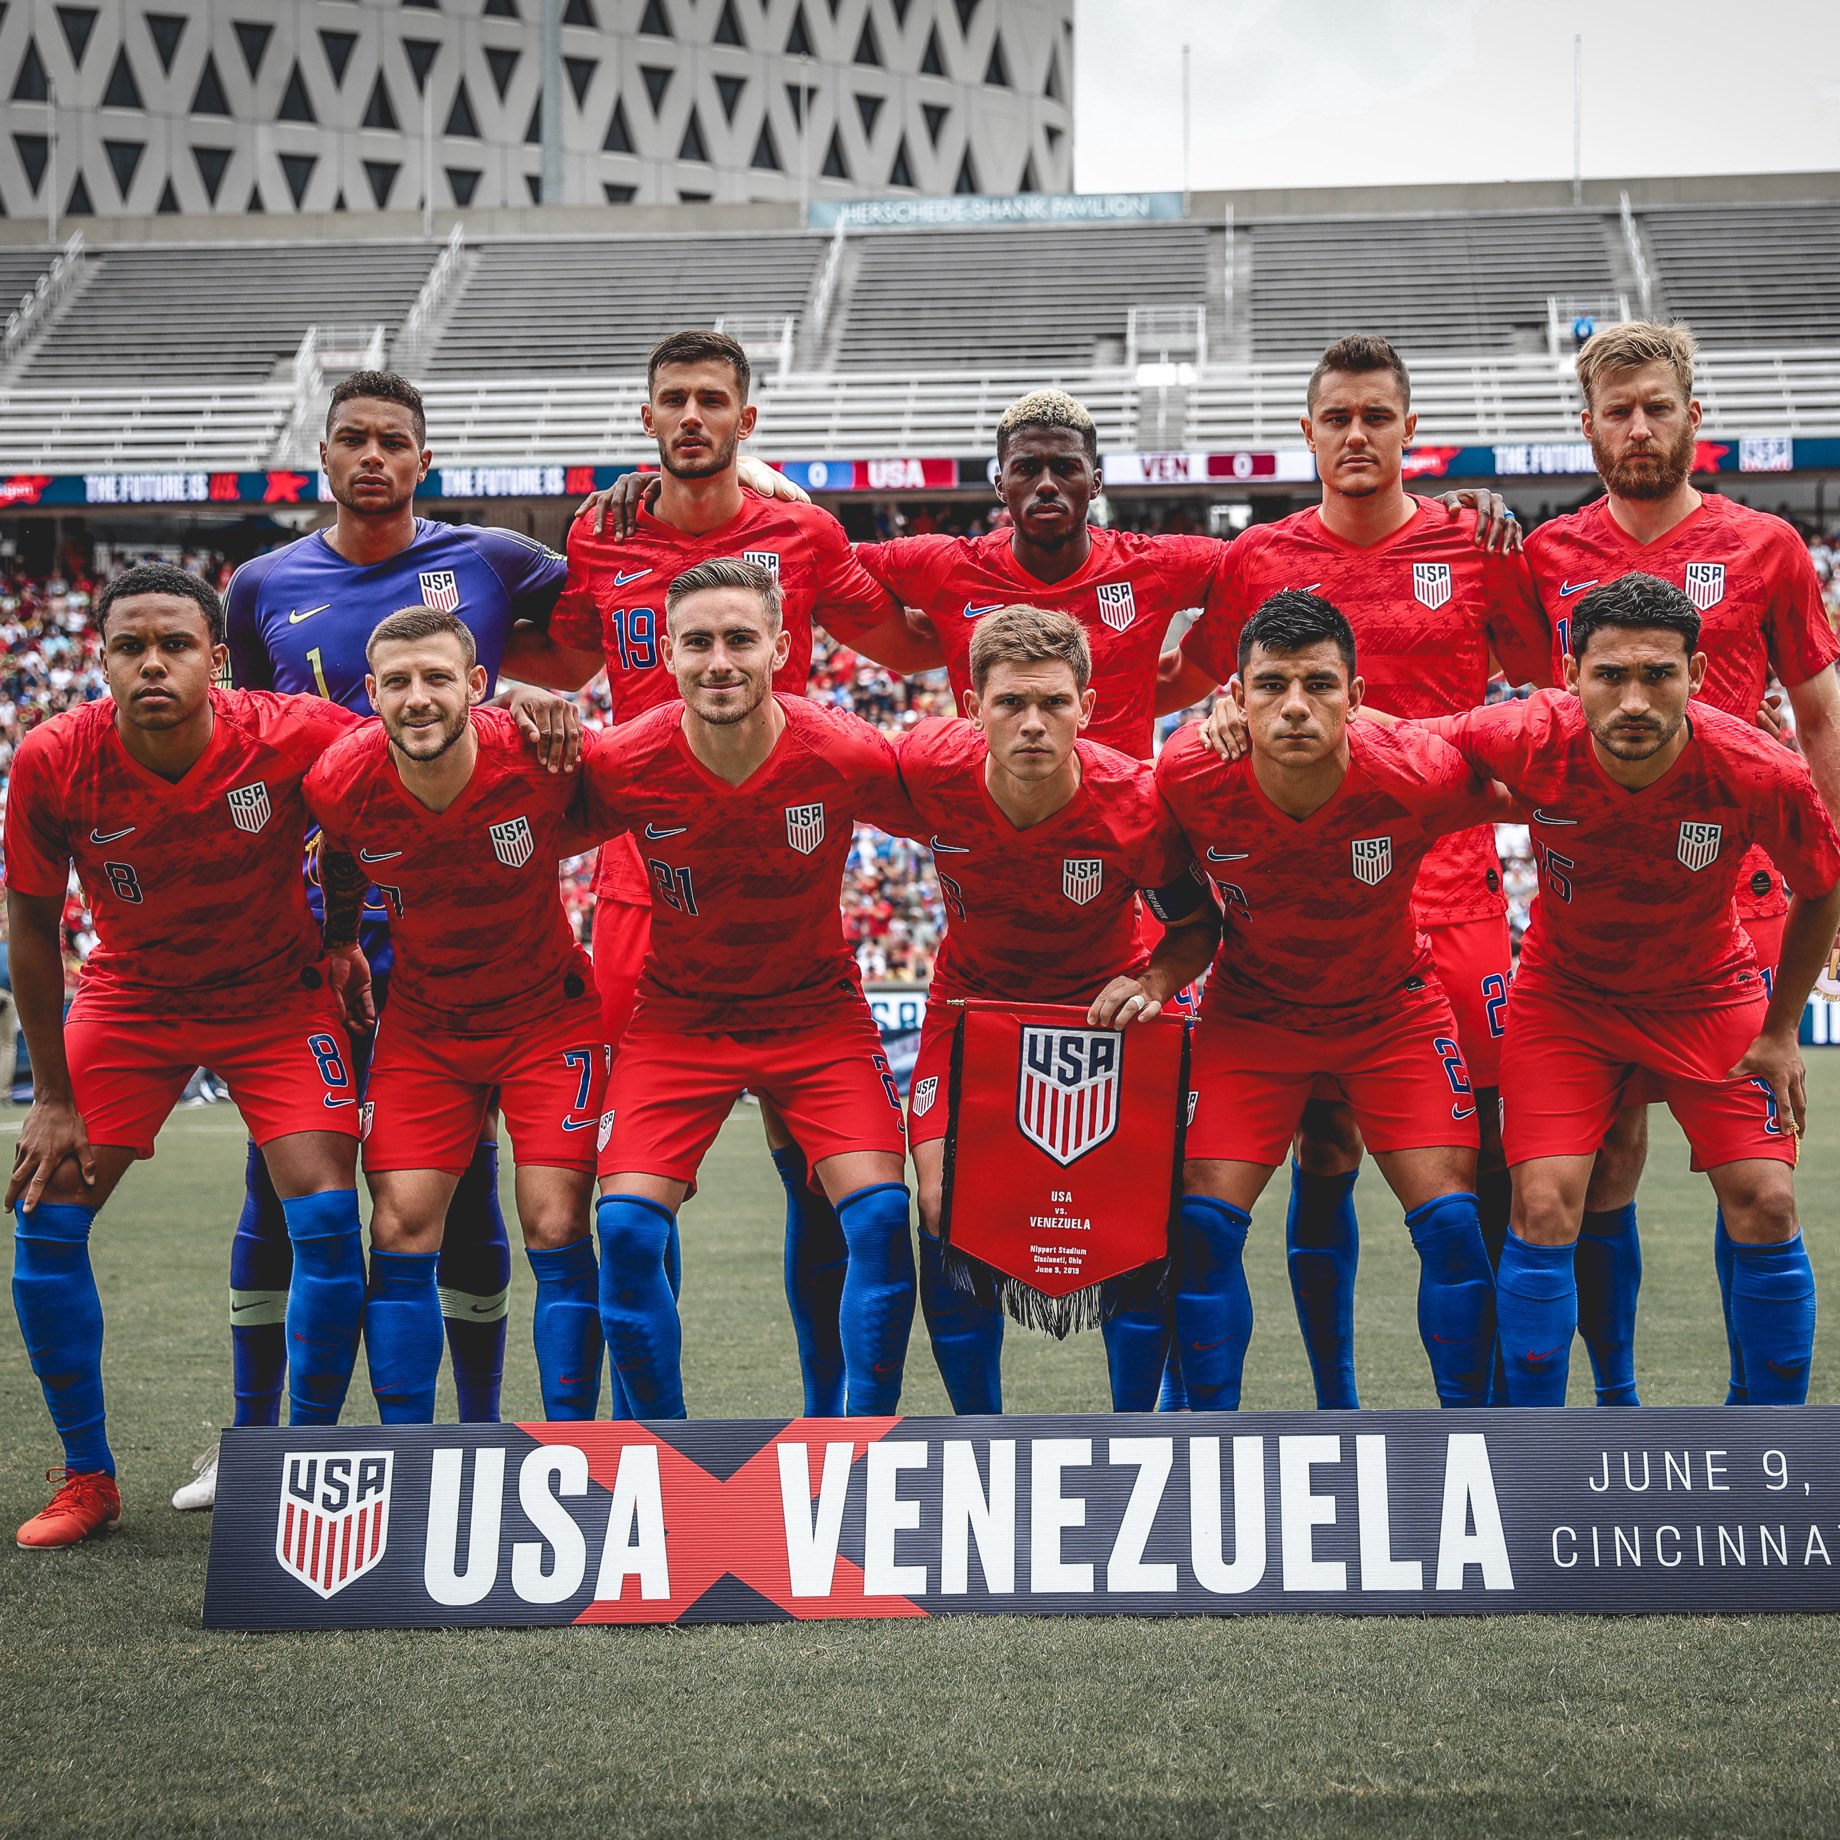 USA vs Venezuela - 6/9/2019 